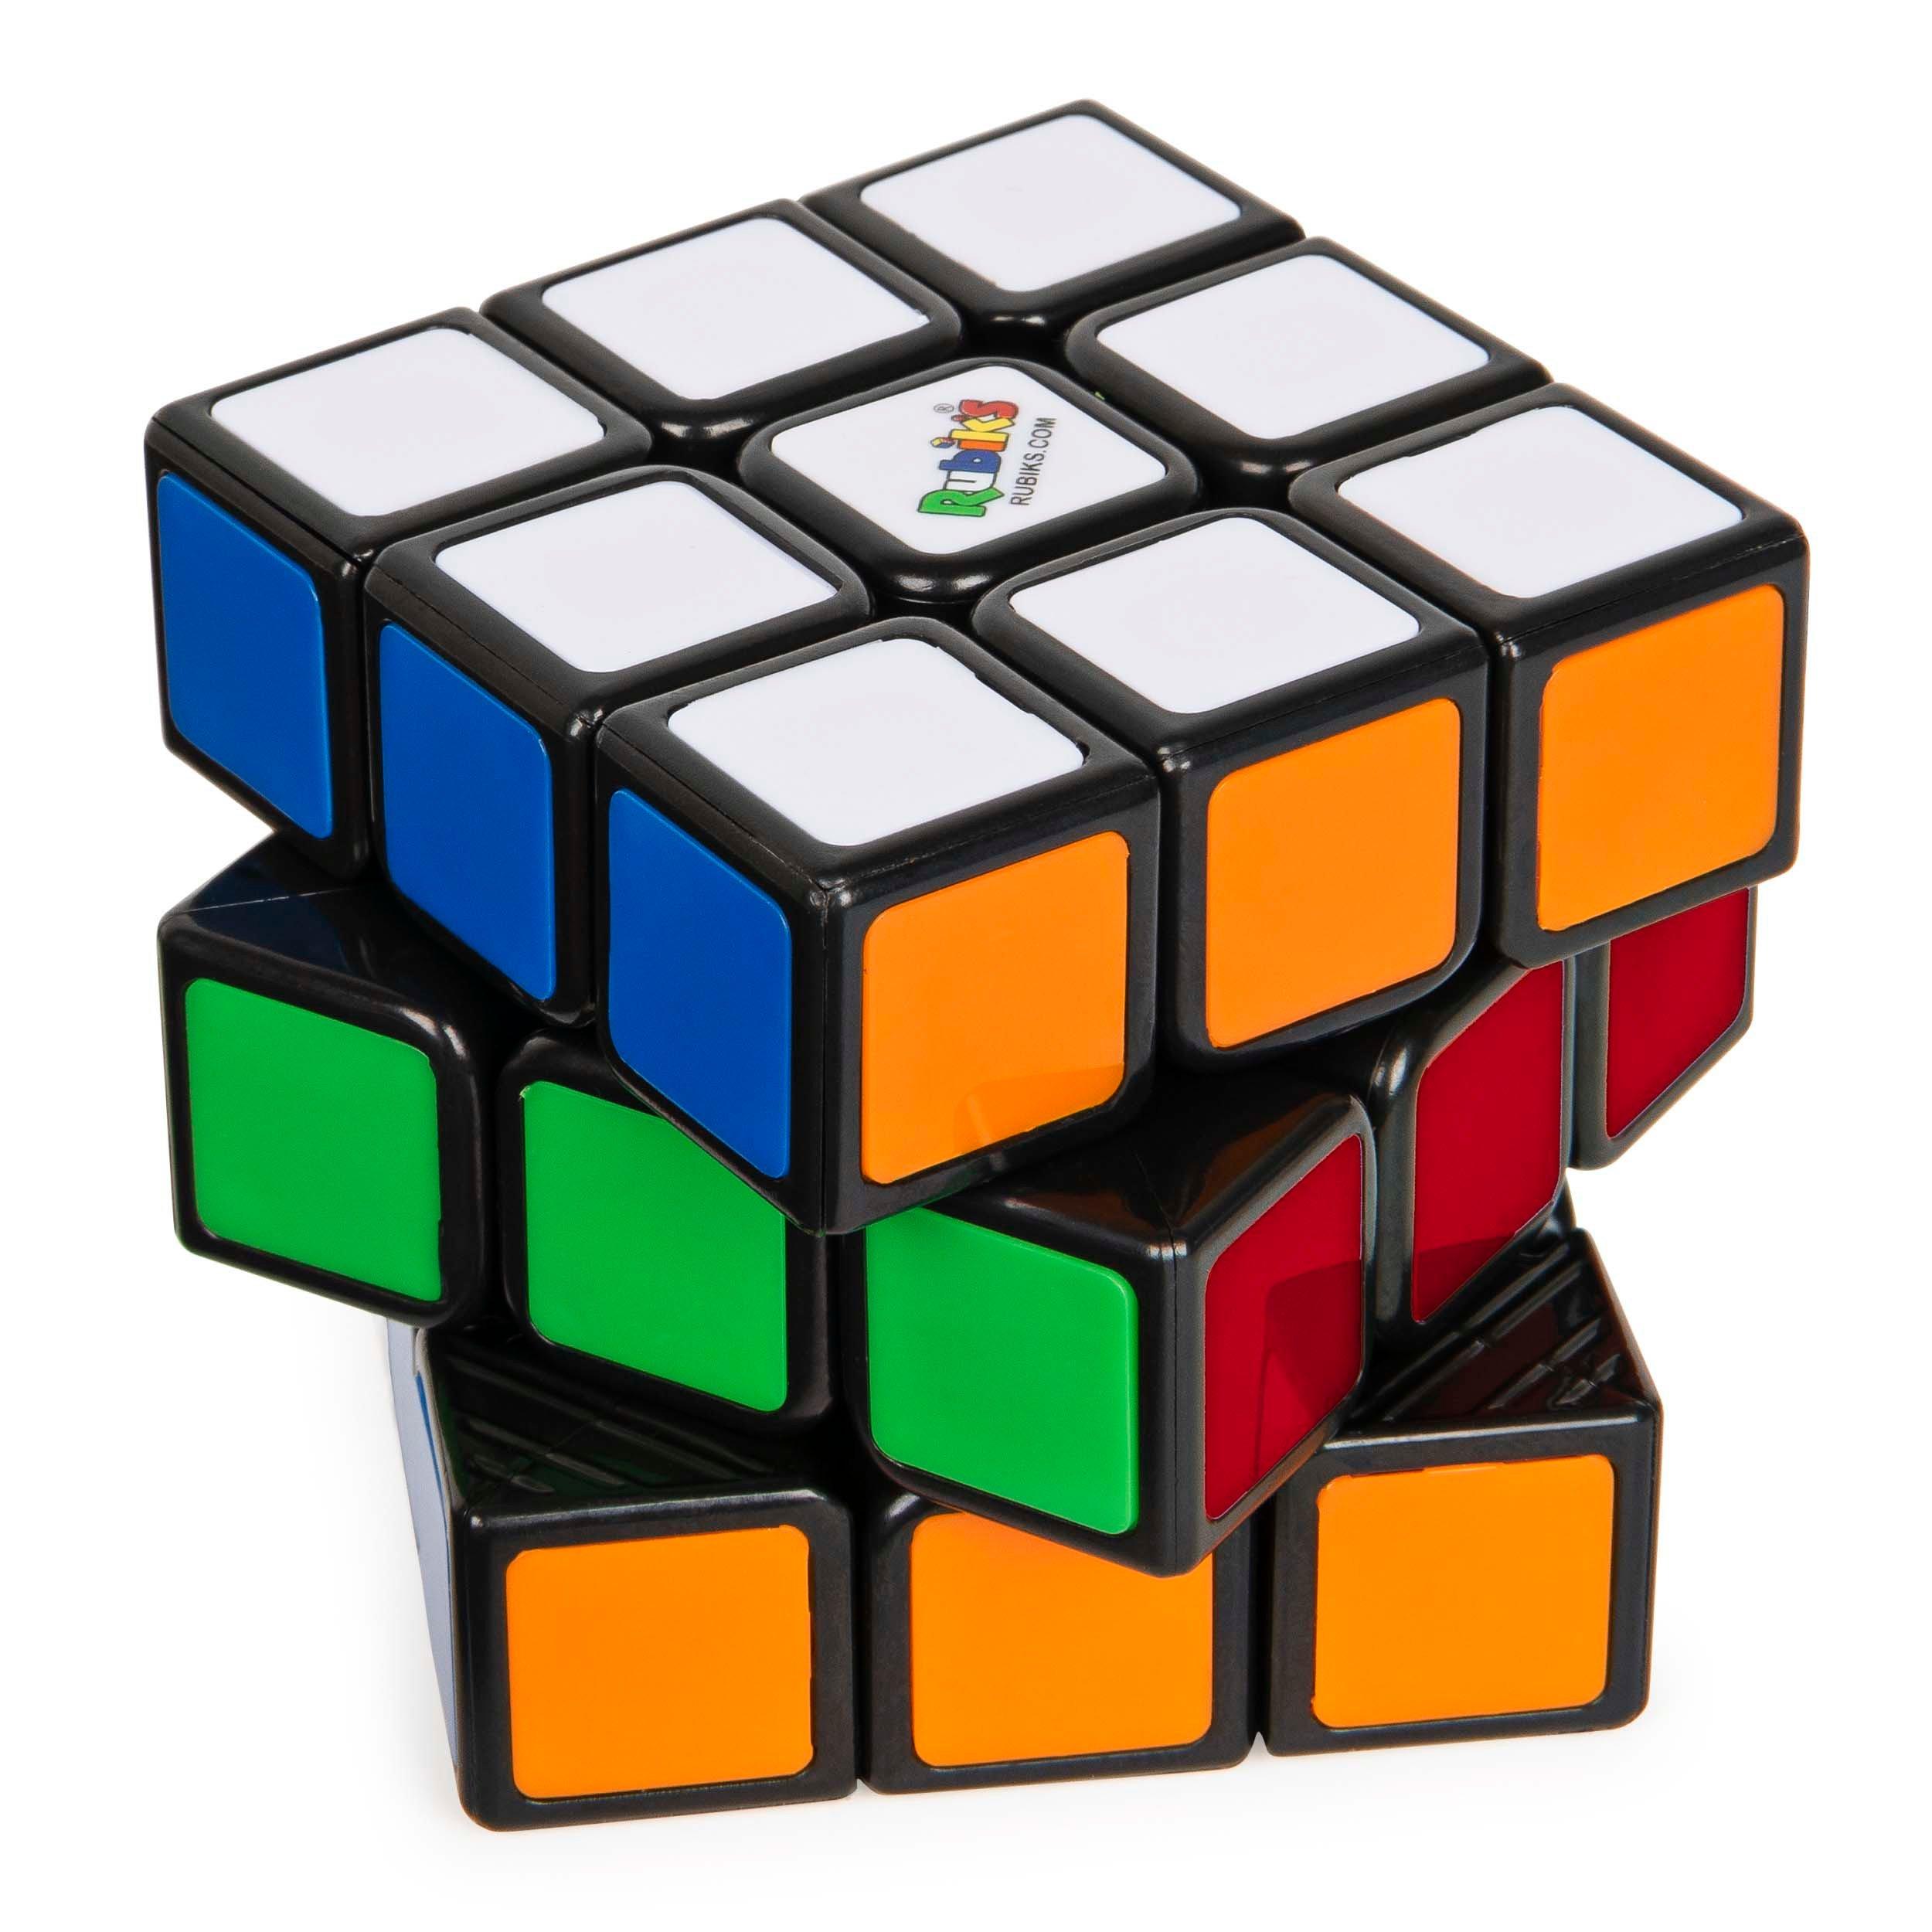 Rubik's Cube (3x3x3)-1 pcs : Non-Brand